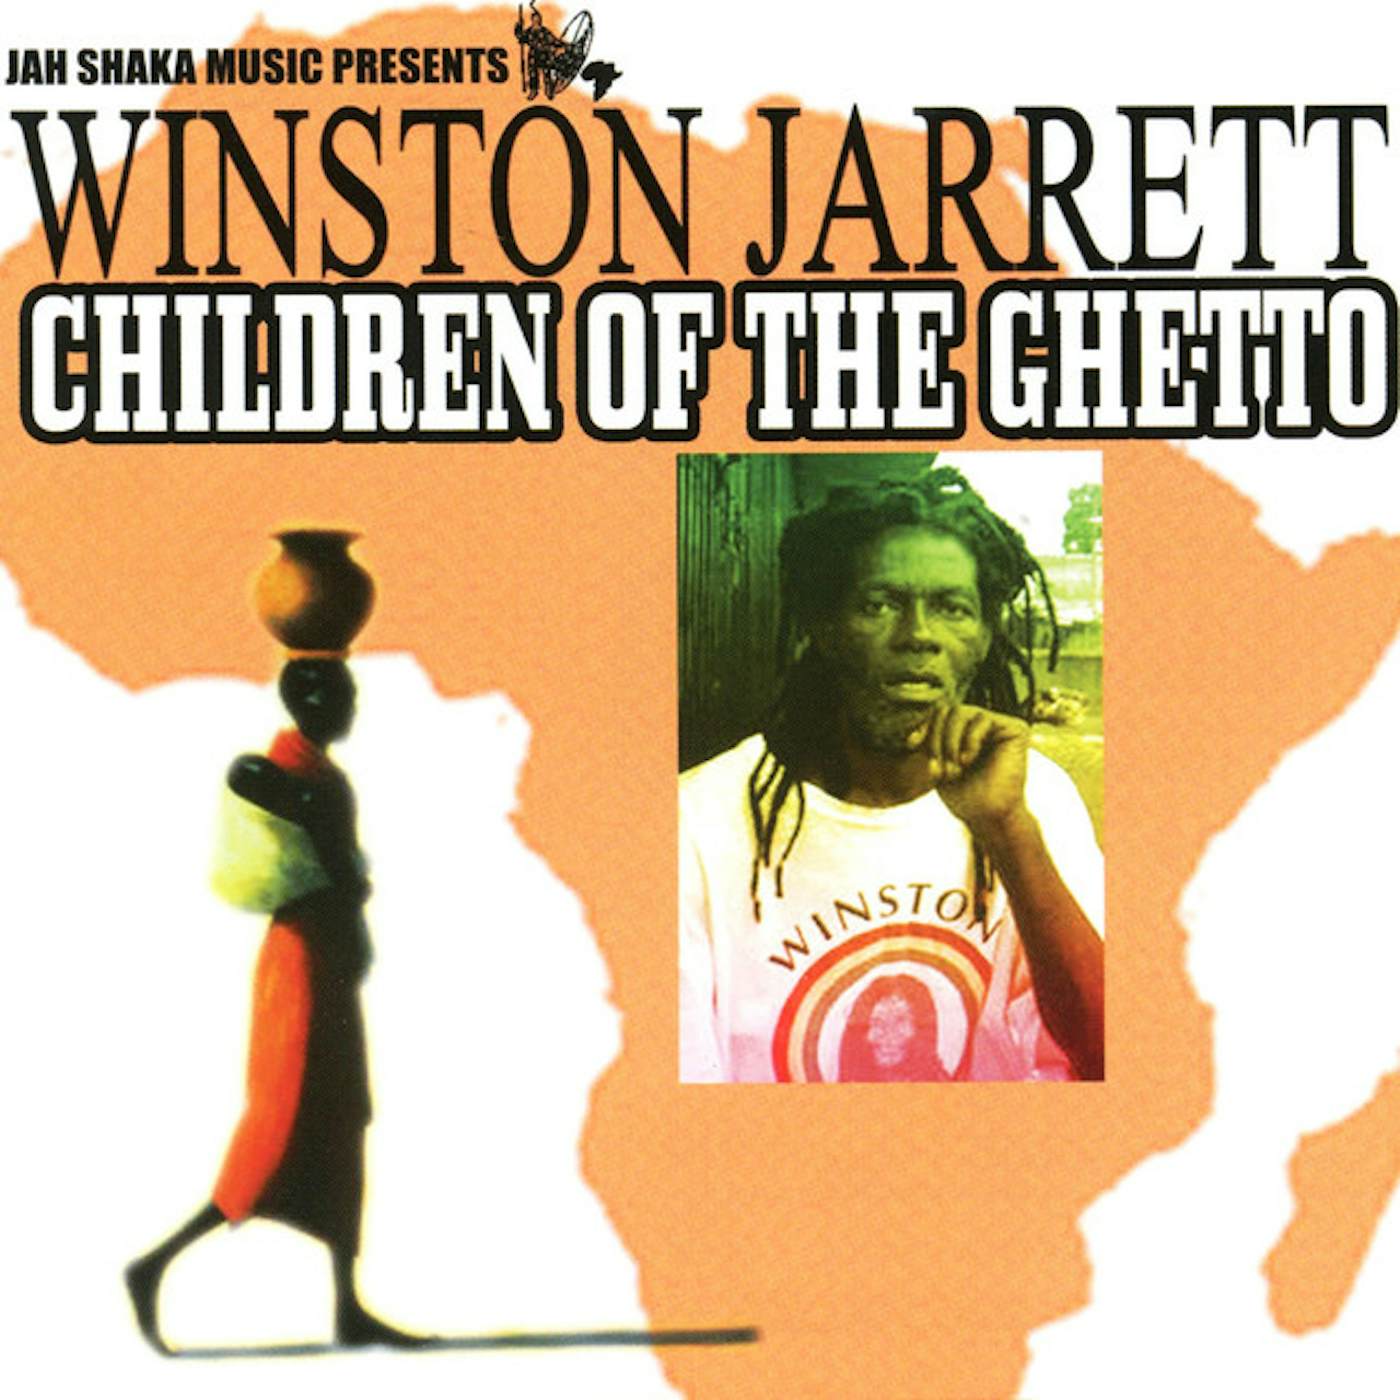 Winston Jarrett Children of the Ghetto Vinyl Record